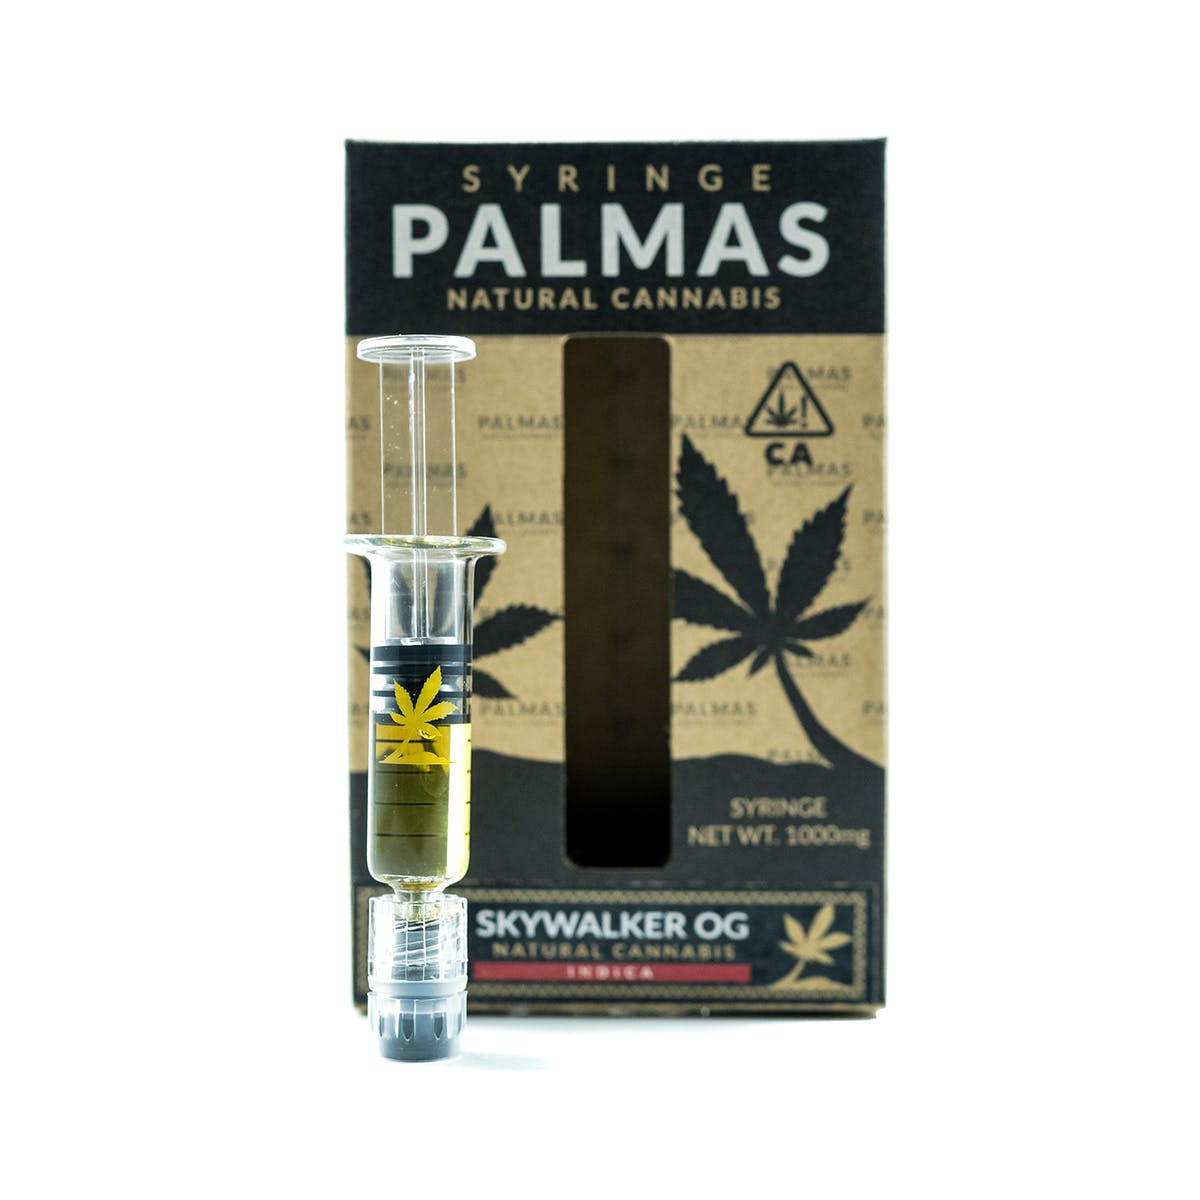 concentrate-palmas-cannabis-palmas-syringe-skywalker-og-1000mg